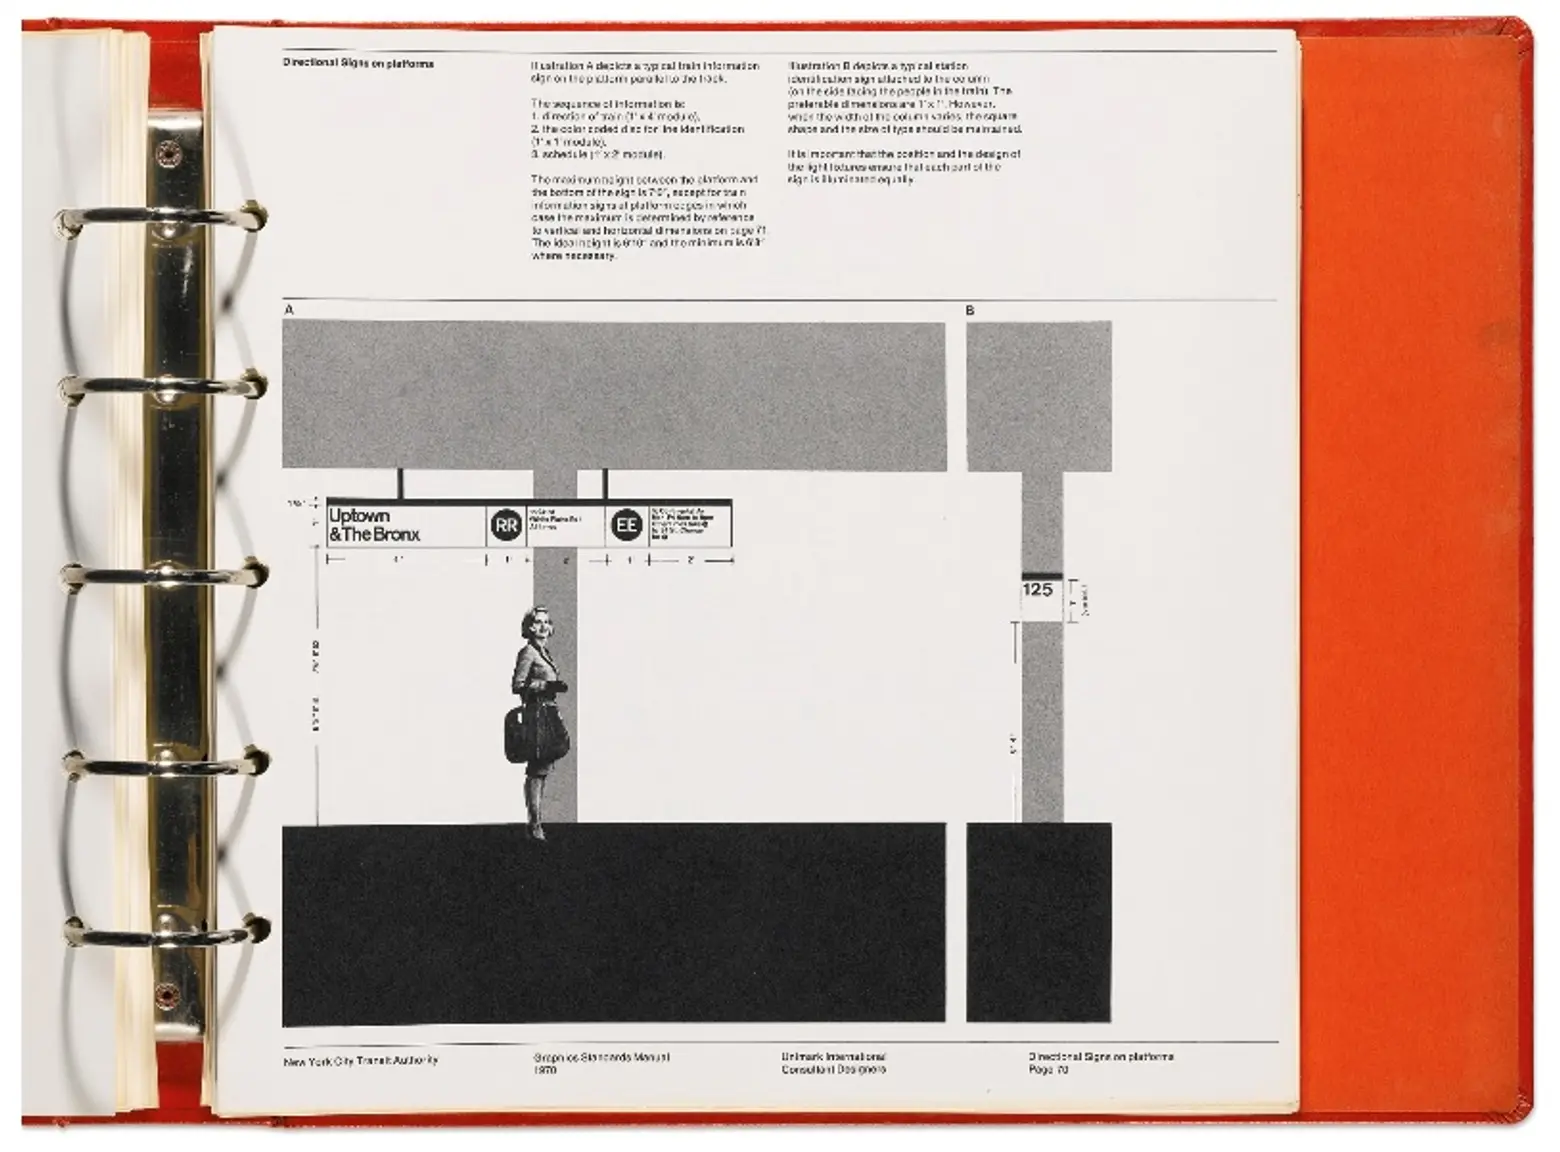 Massimo Vignelli, Bob Noorda, NYC Transit Authority Graphics Standards Manual